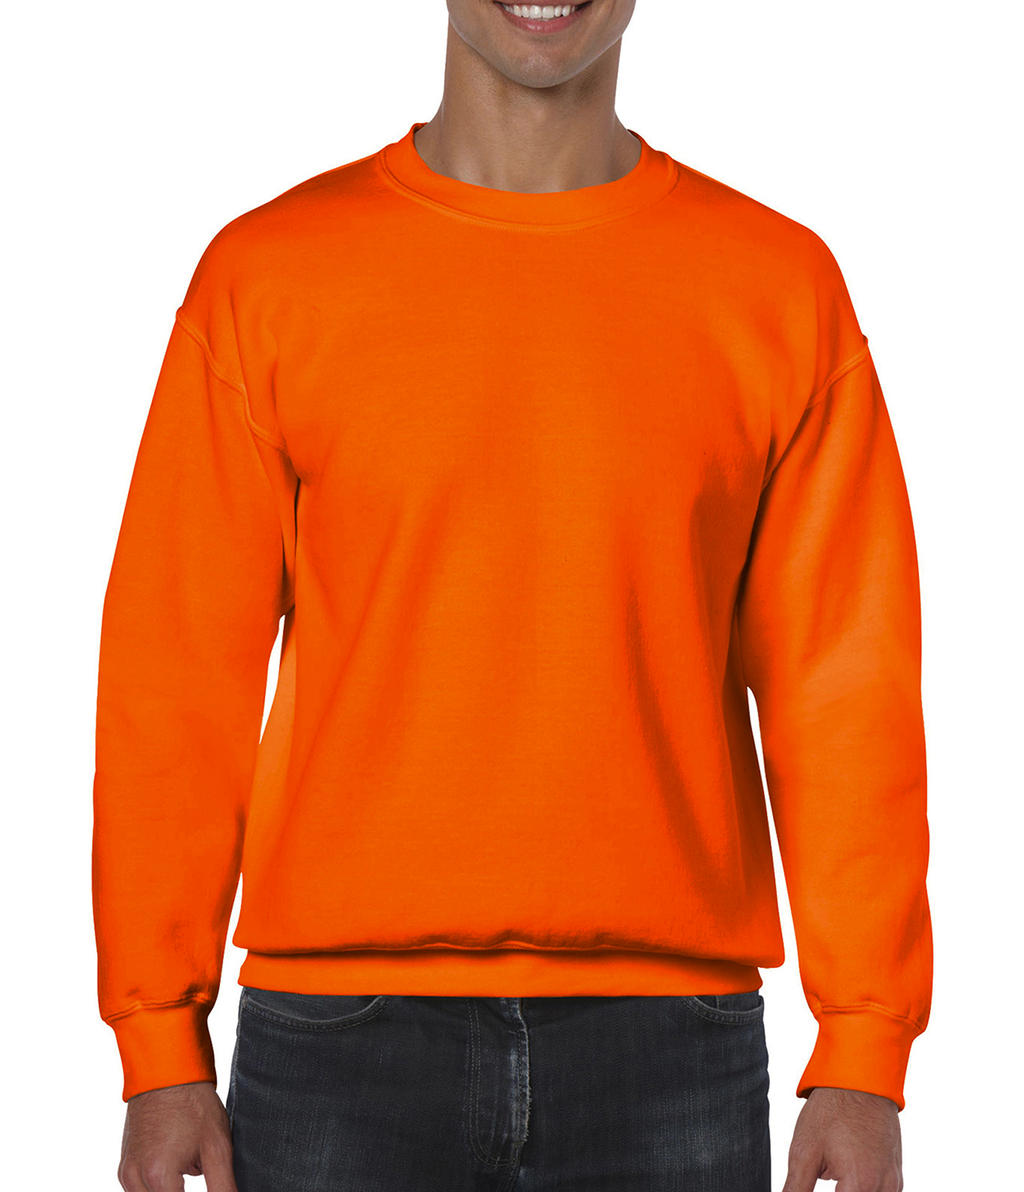  Heavy Blend Adult Crewneck Sweat in Farbe Safety Orange